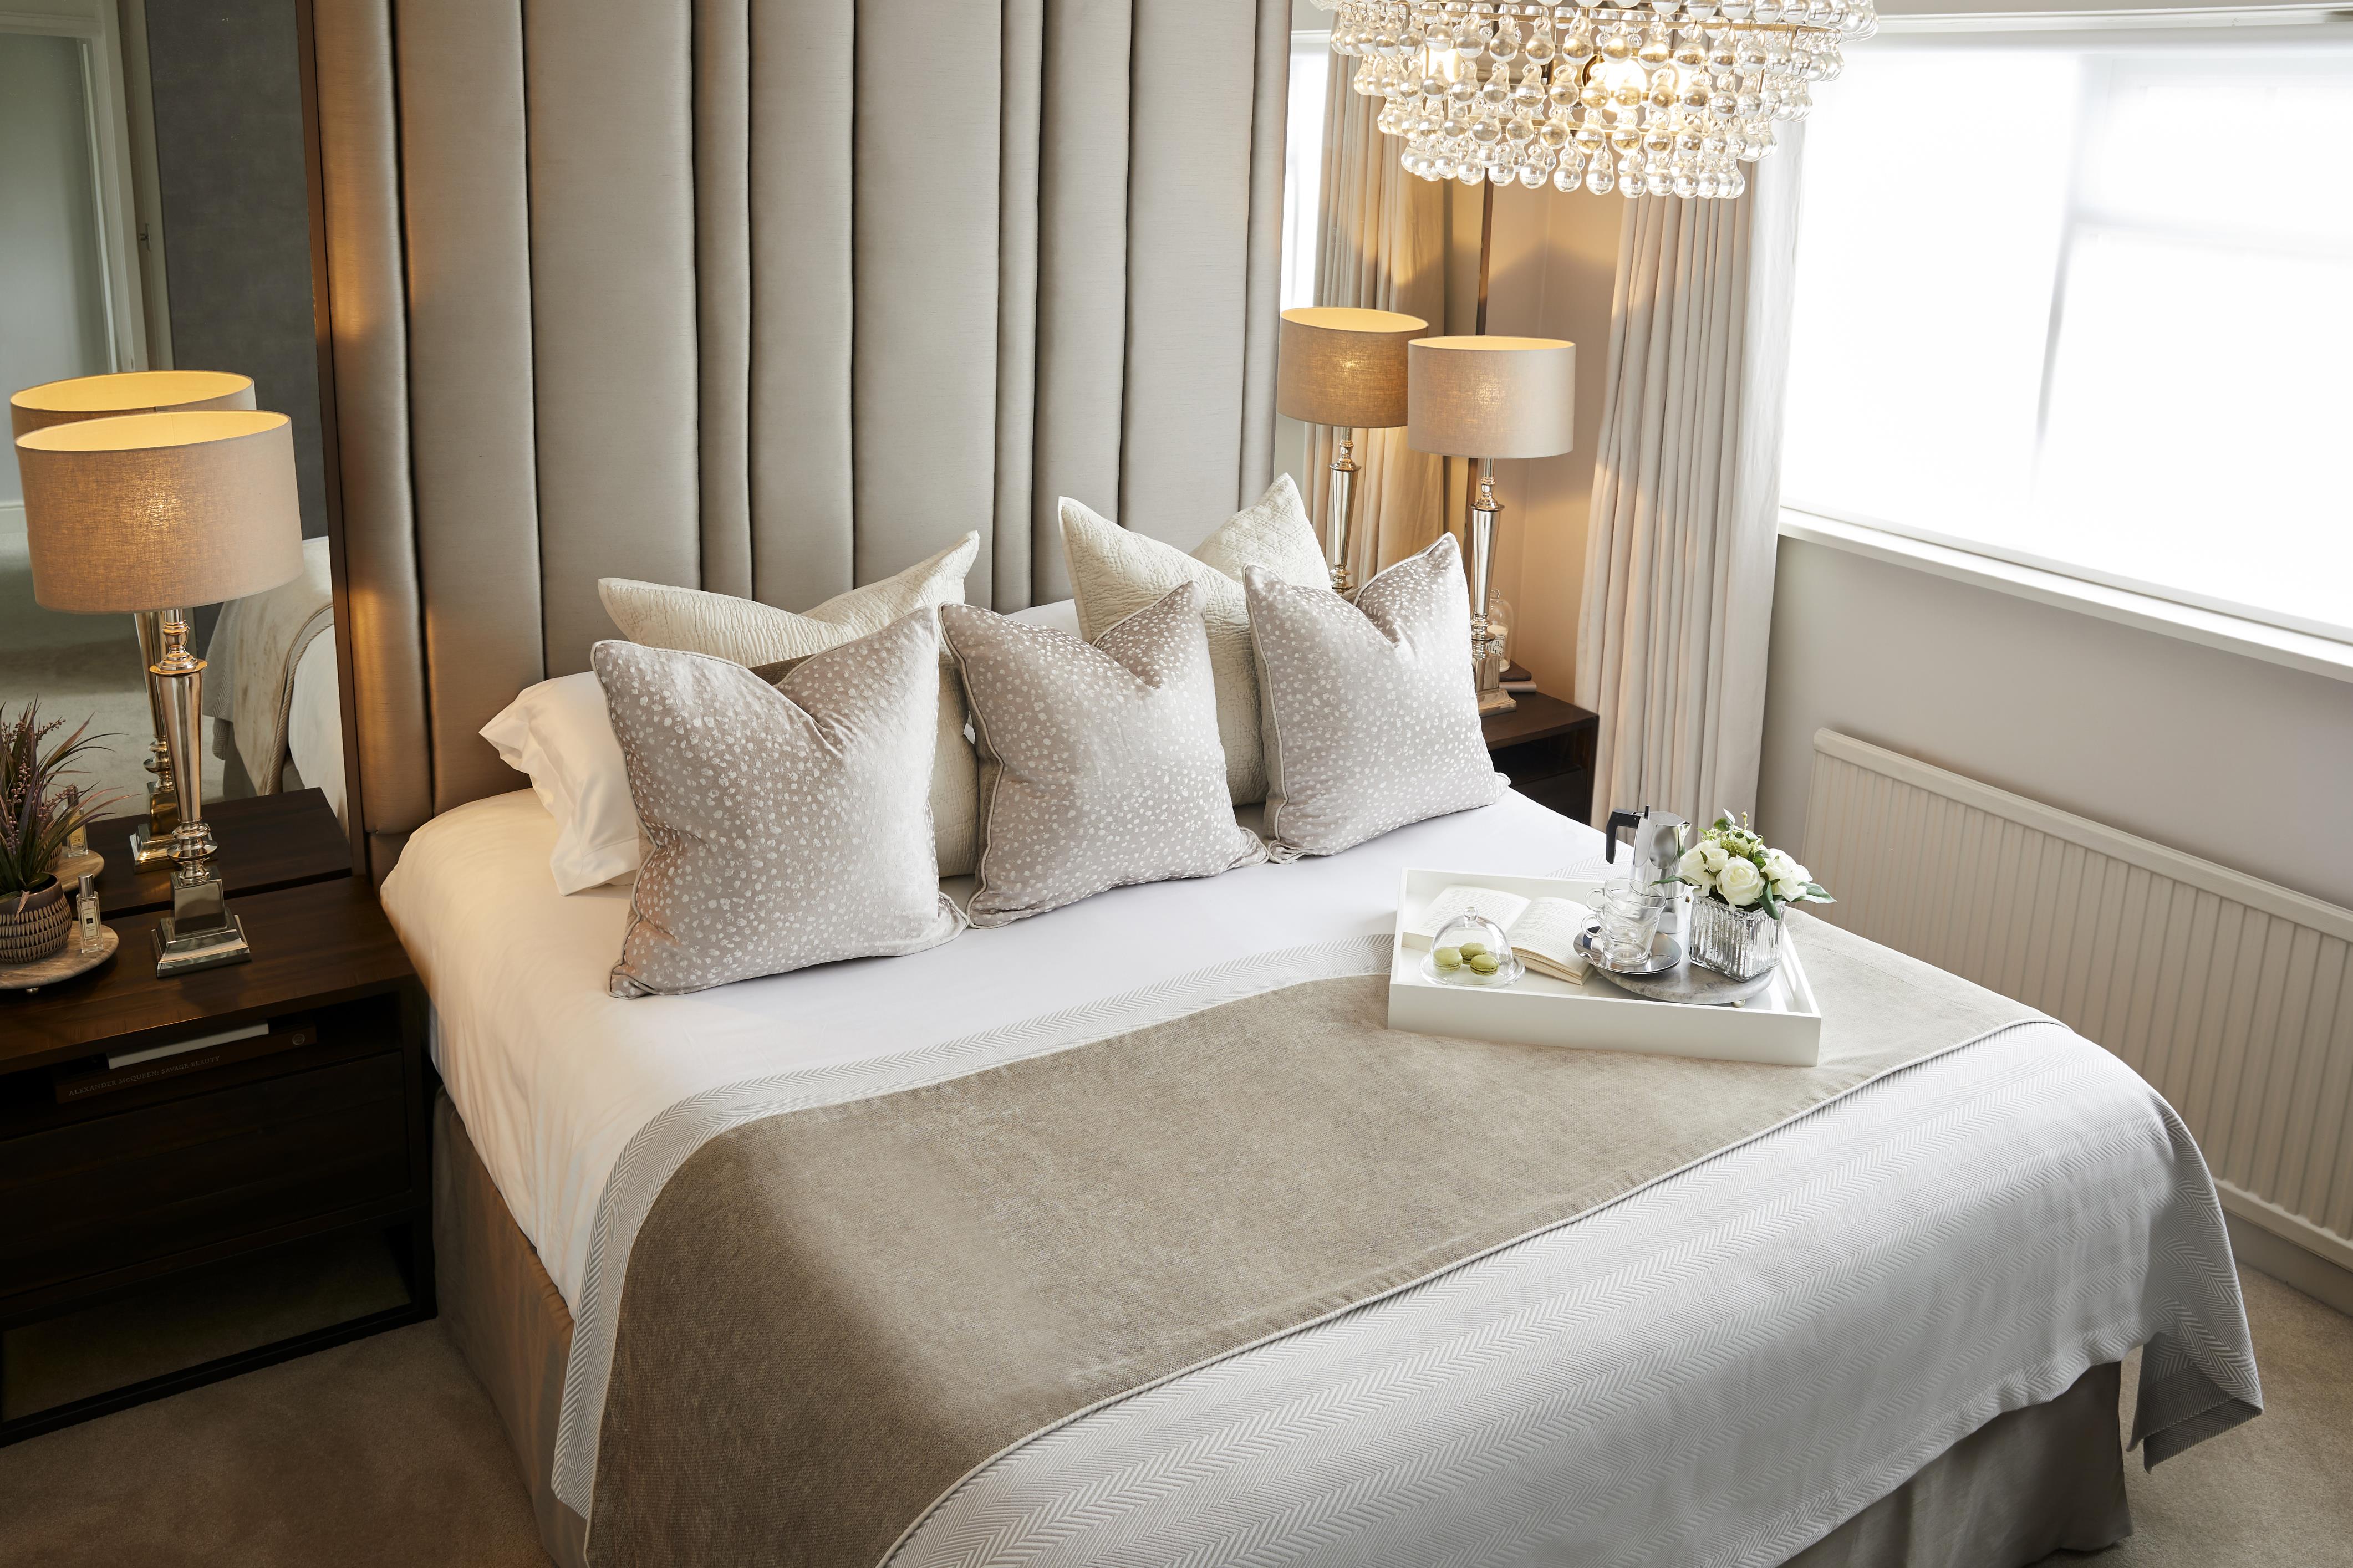 hotel bedroom furniture set suppliers